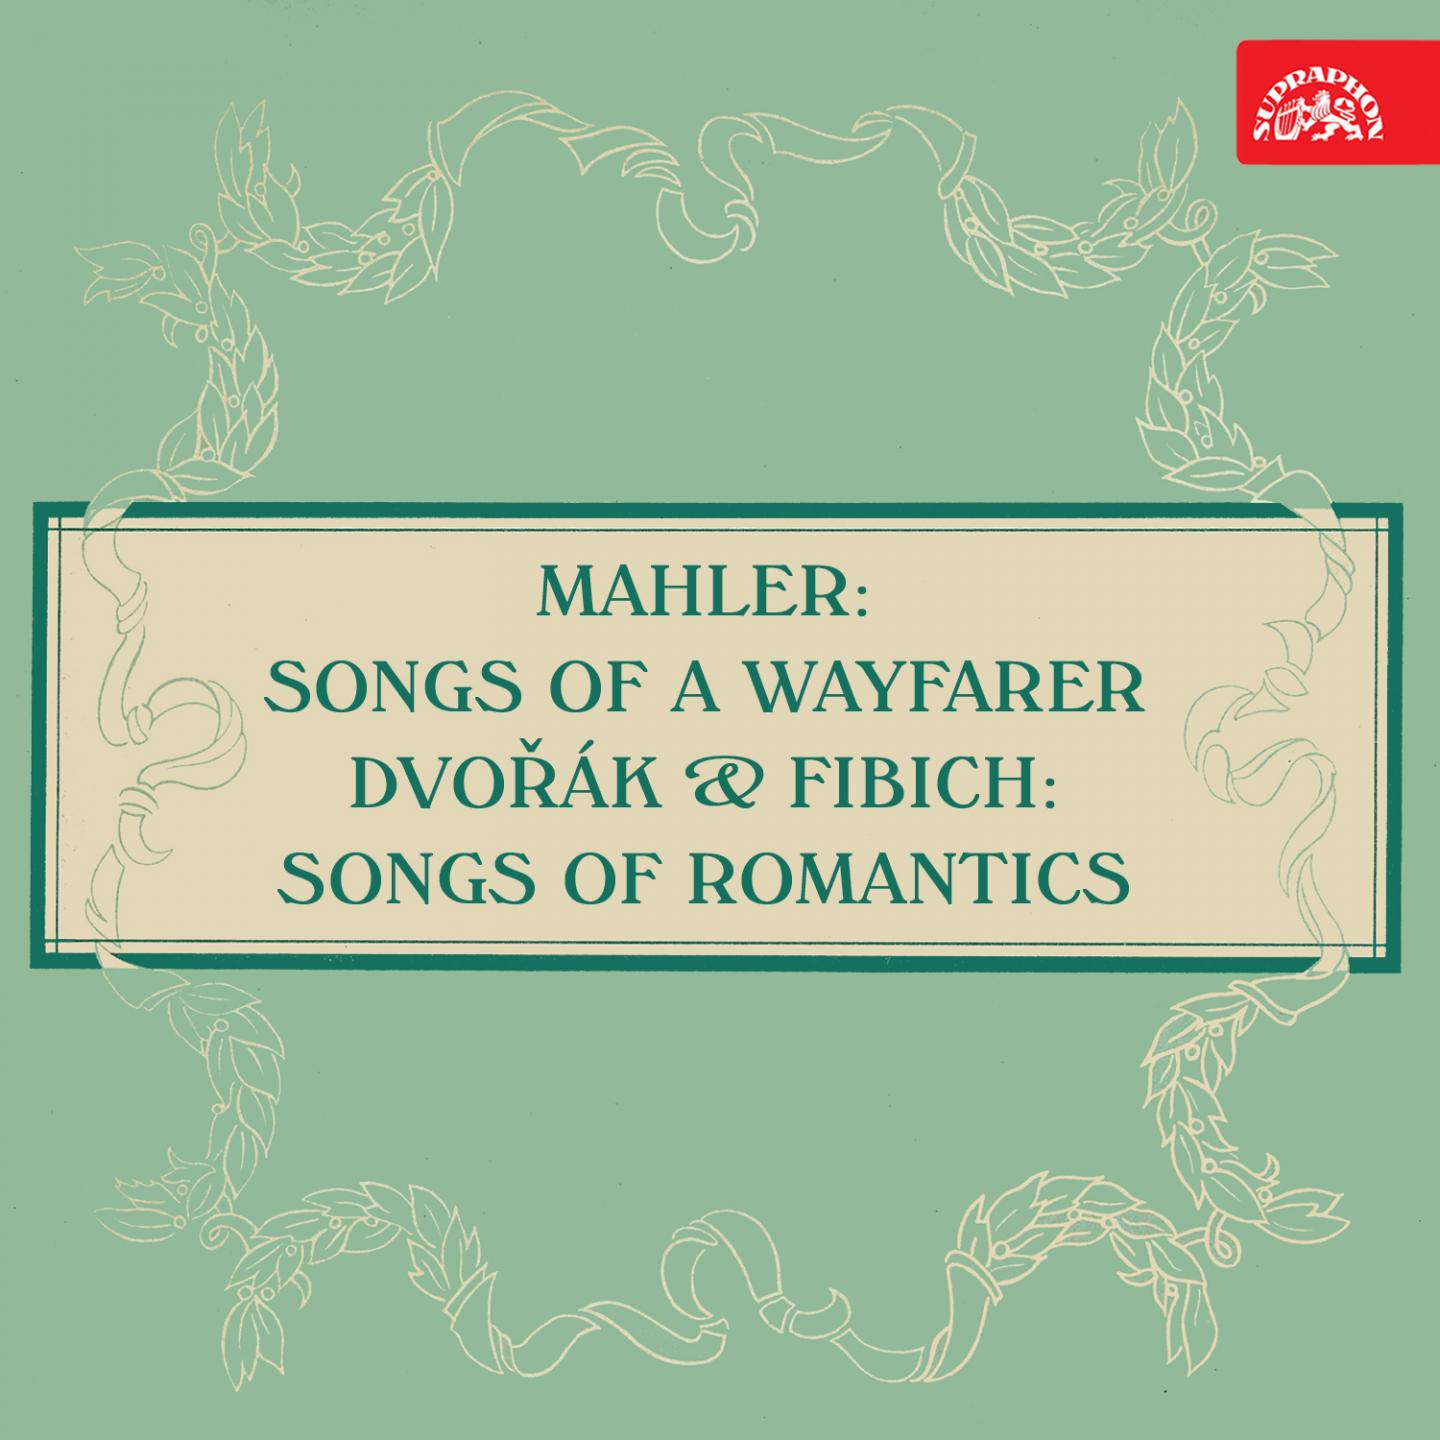 Mahler: Songs of a Wayfarer  Dvoa k  Fibich: Songs of Romantics